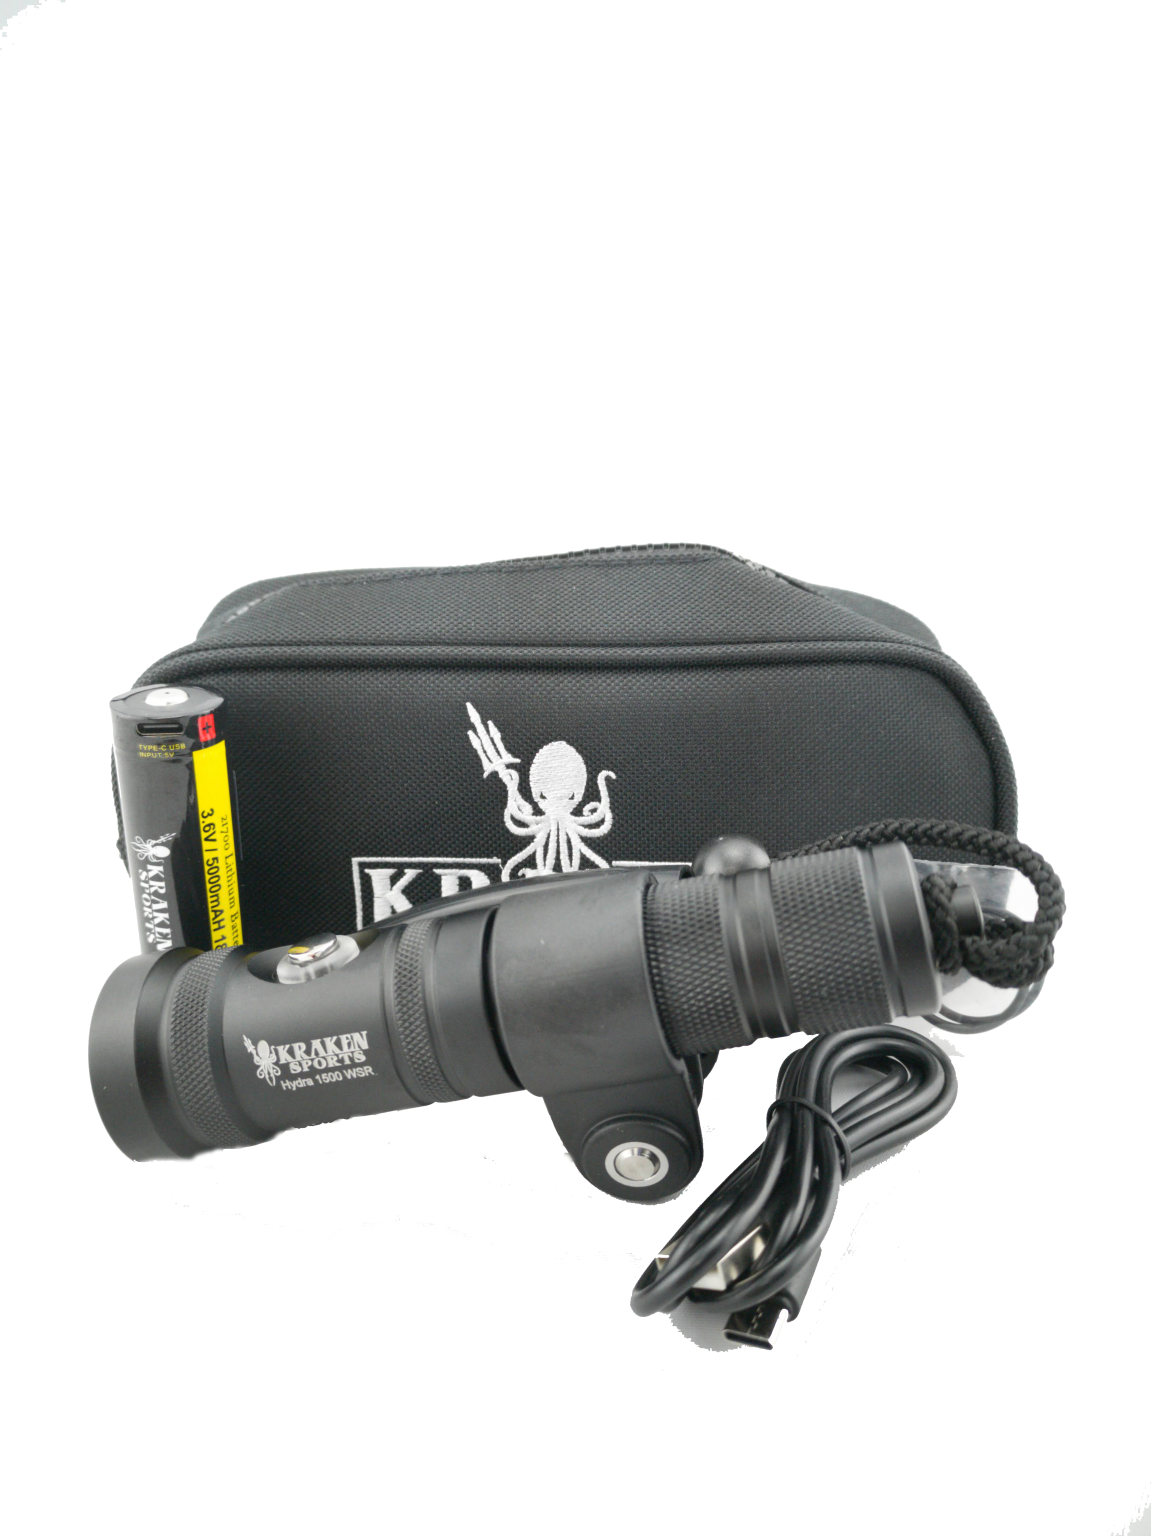 Kraken Dive Lights Hydra 1500 WSR+ for Photo & Video